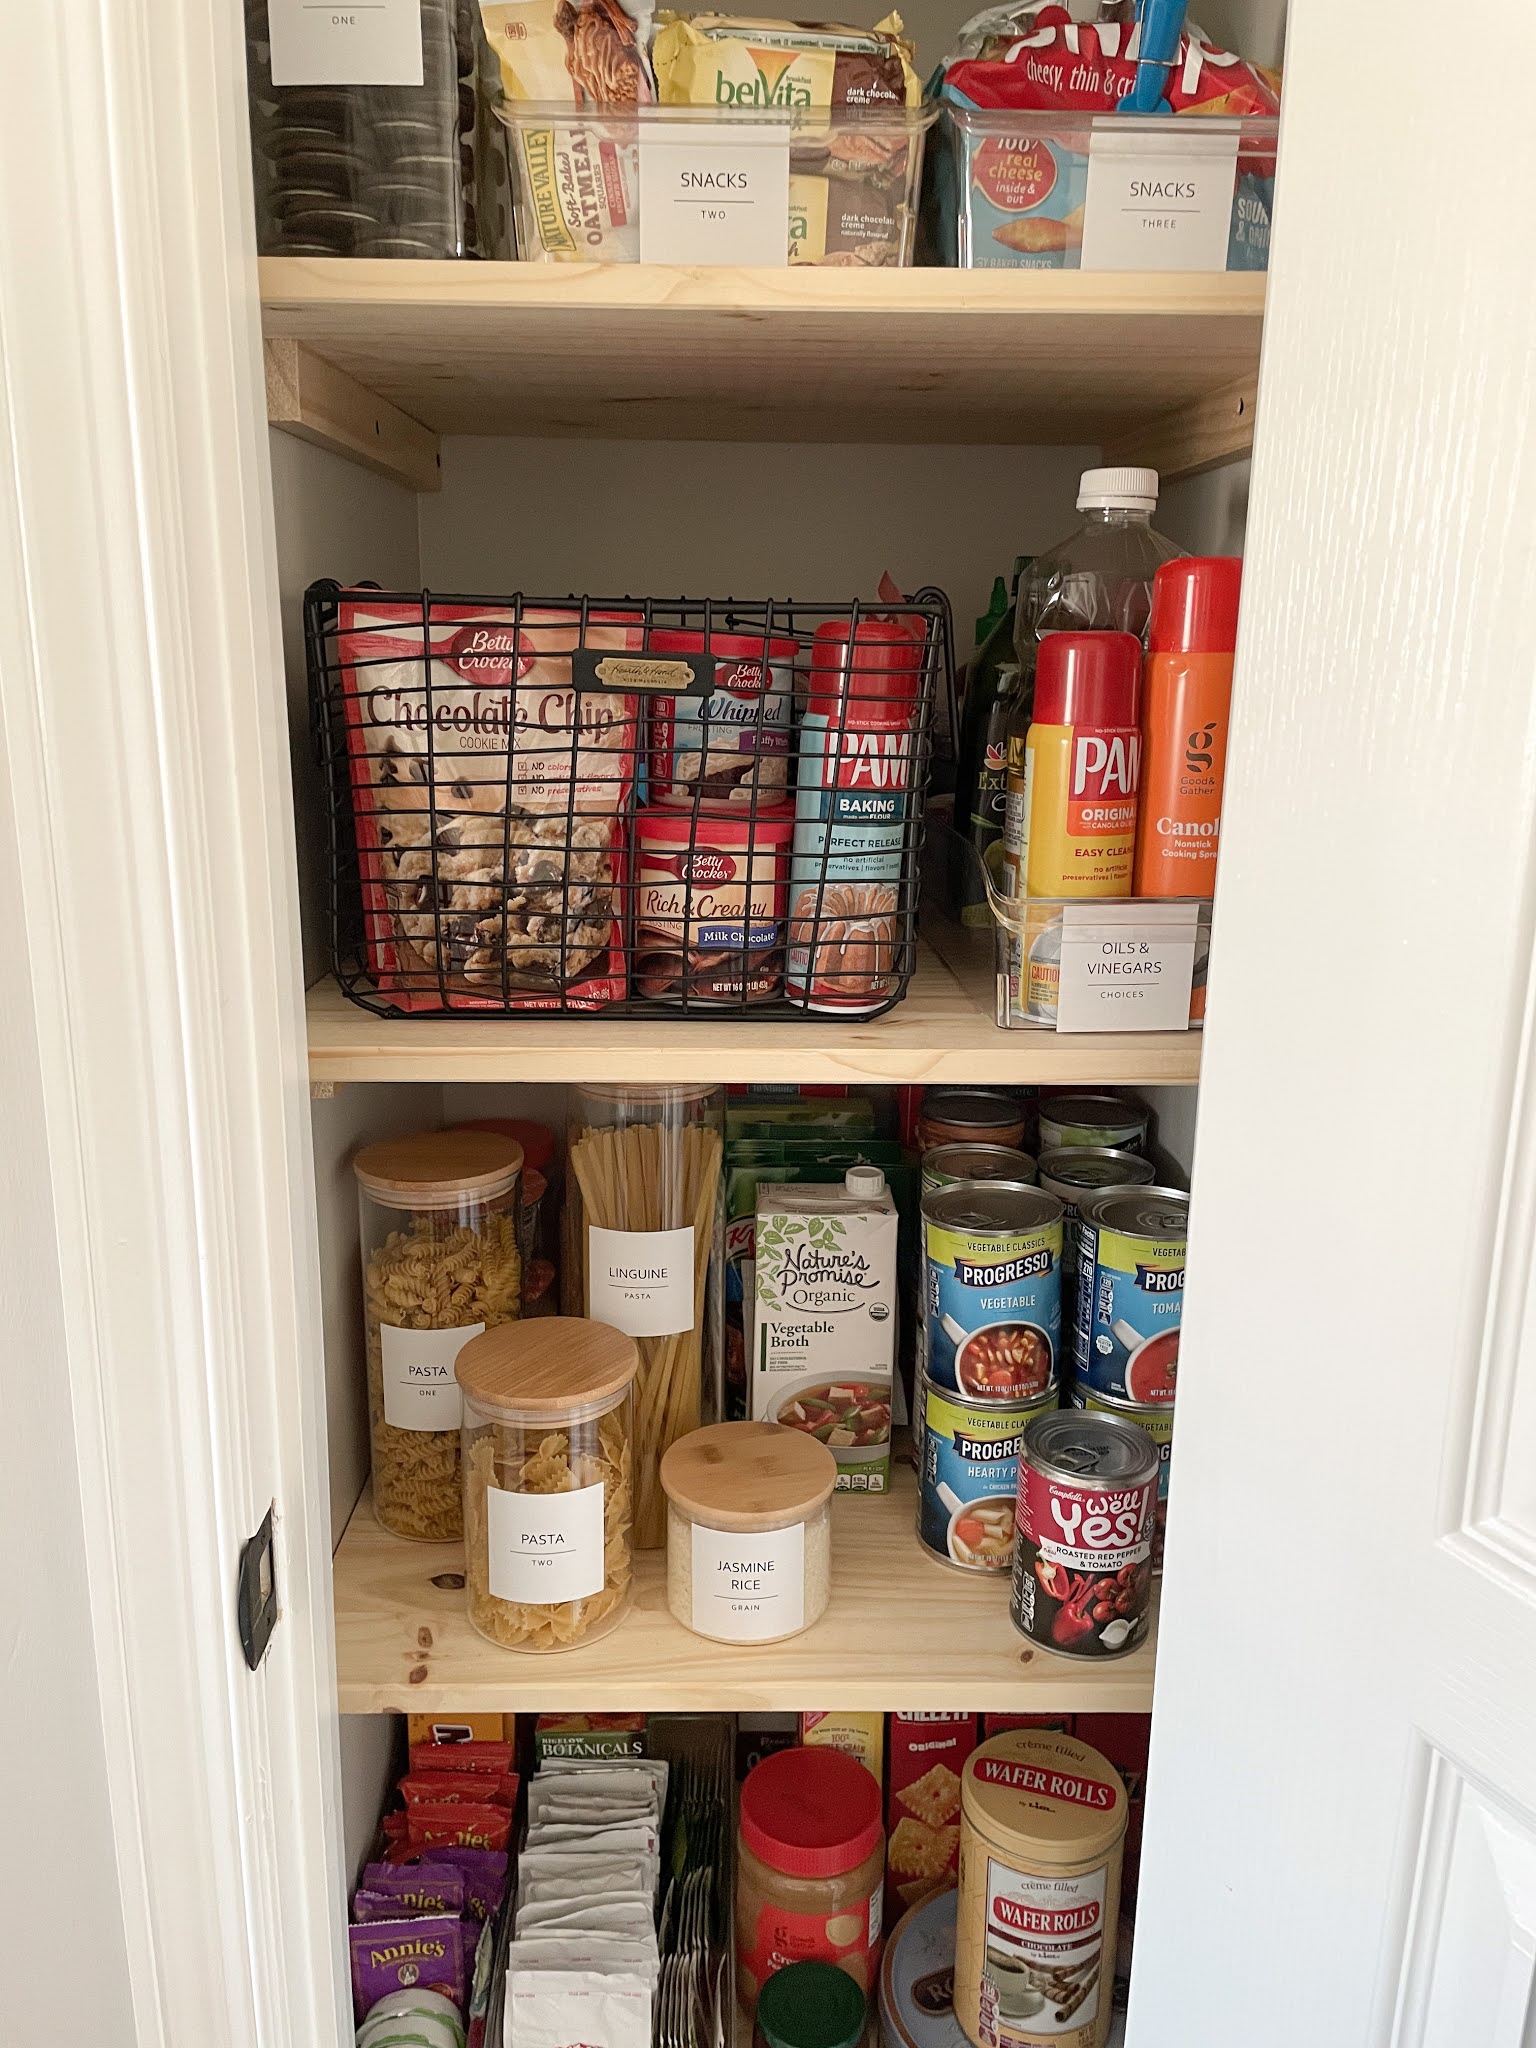 30 Mind Blowing DIY Mason Jar Organizers You'll Want To Make Right Away   Diy kitchen shelves, Kitchen shelves organization, Mason jar organization